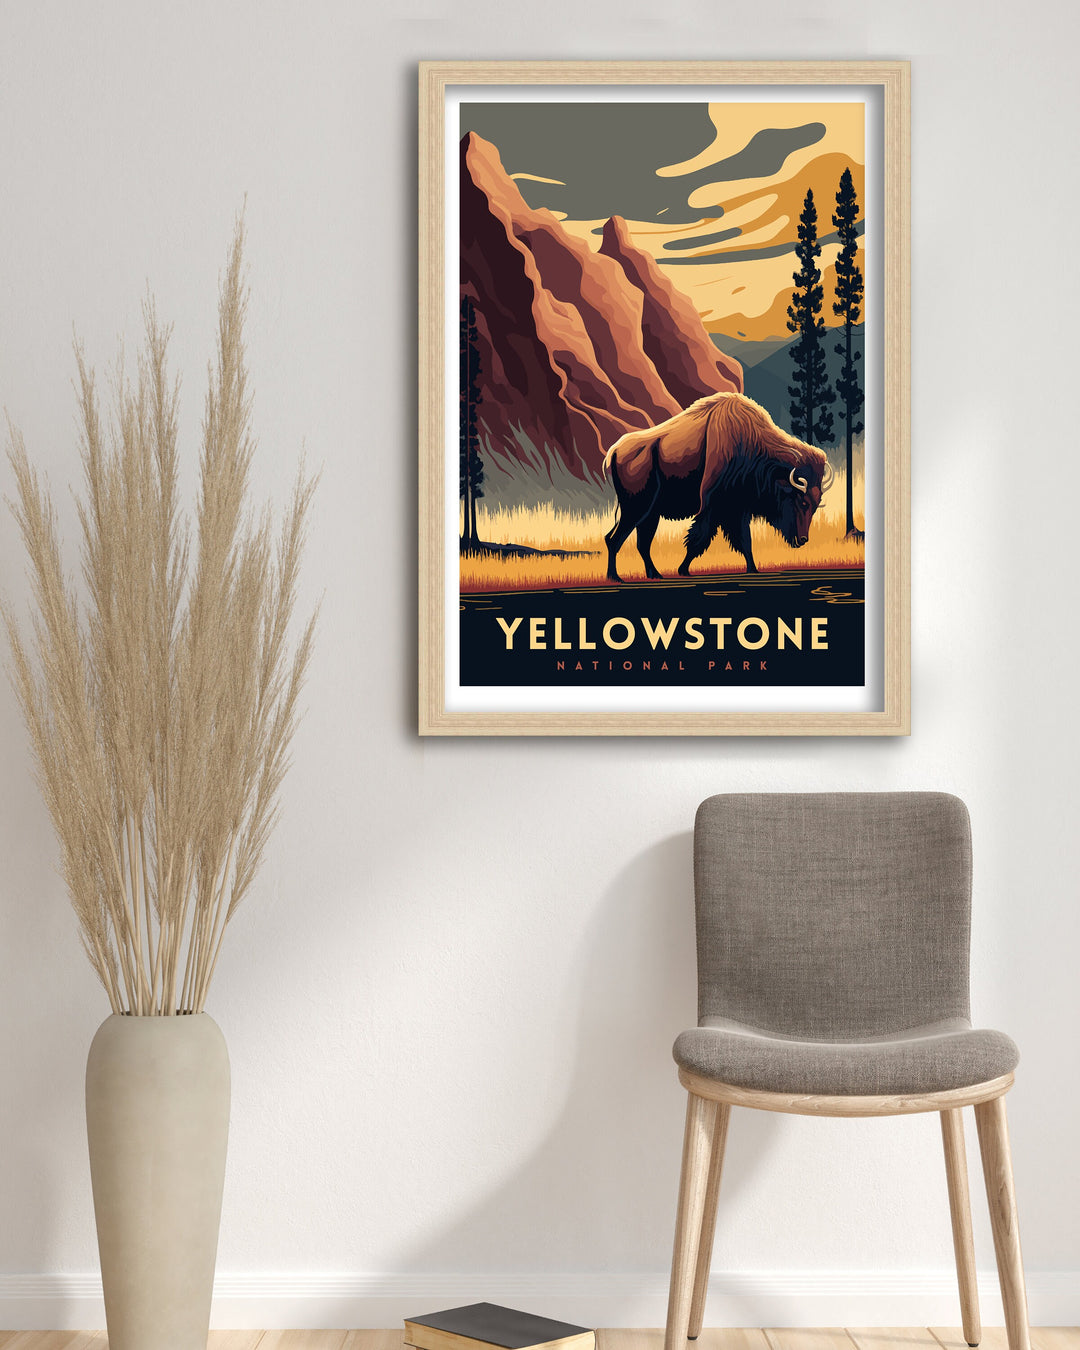 Yellowstone Travel Poster | Yellowstone Poster